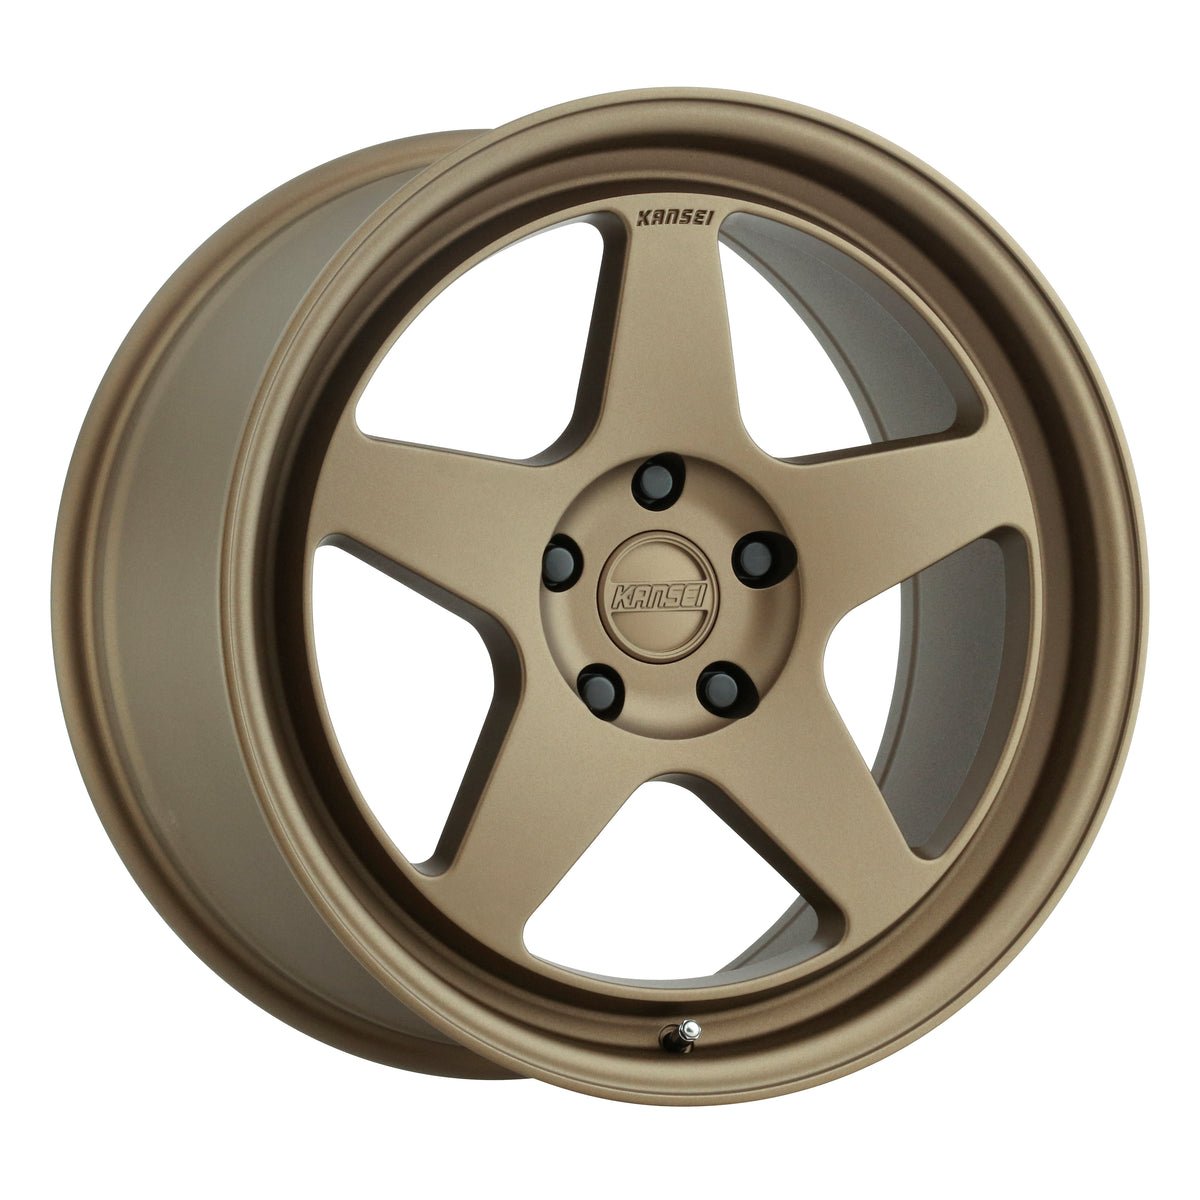 K12B KNP Wheel, Size: 17" x 9", Bolt Pattern: 5 x 120 mm, Backspace: 6.38" [Finish: Bronze]